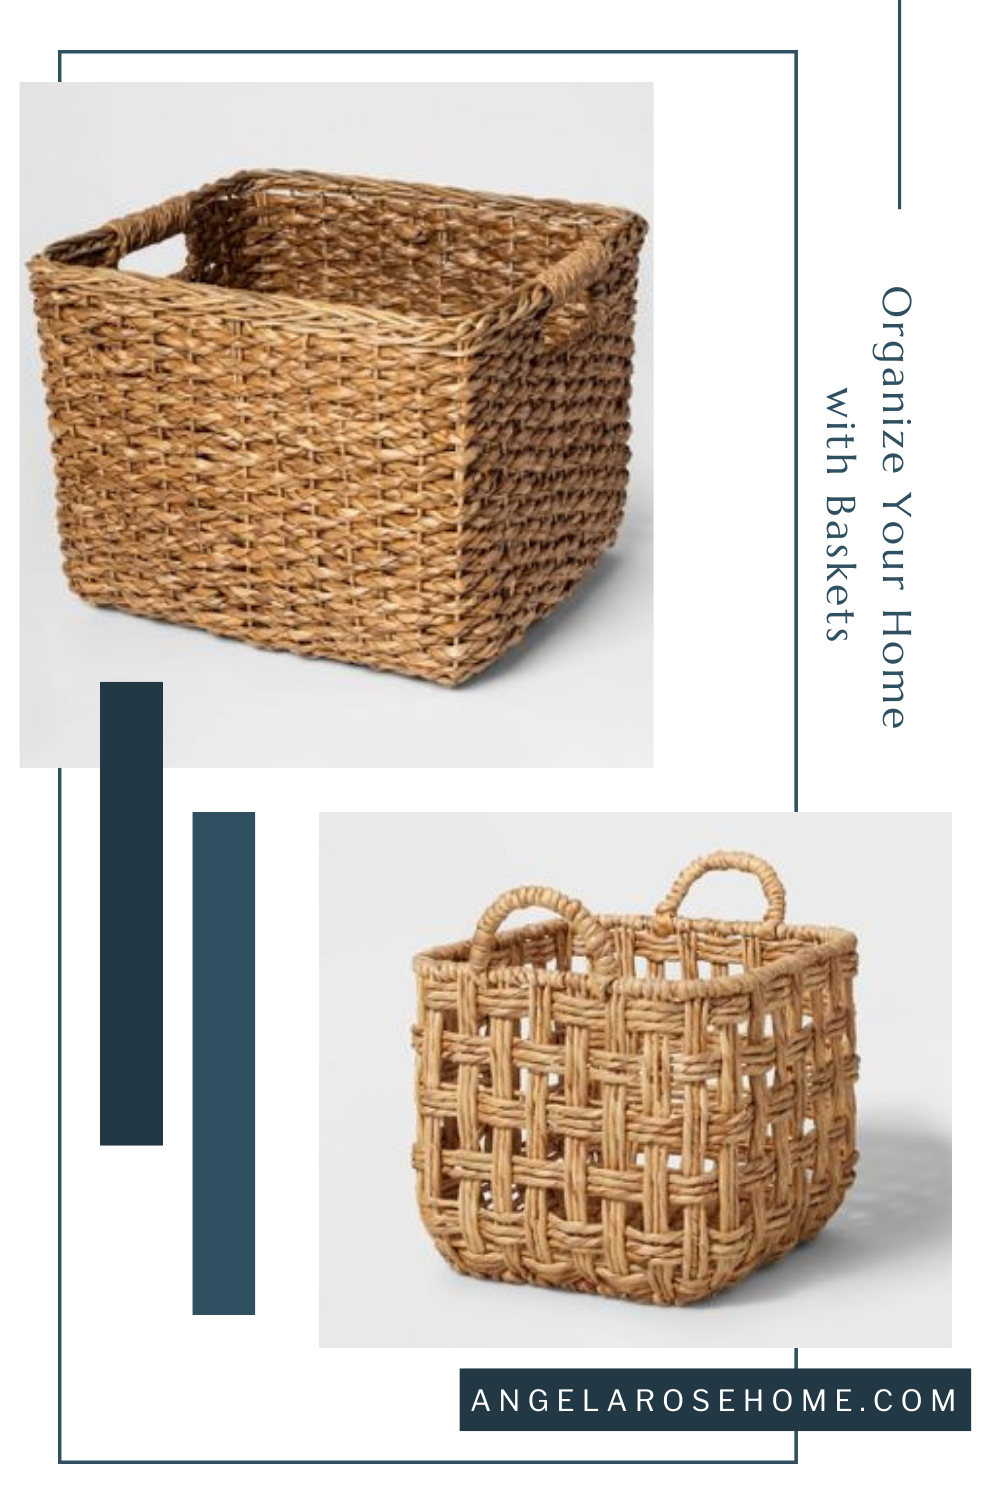 organize your home with baskets www.angelarosehome.com